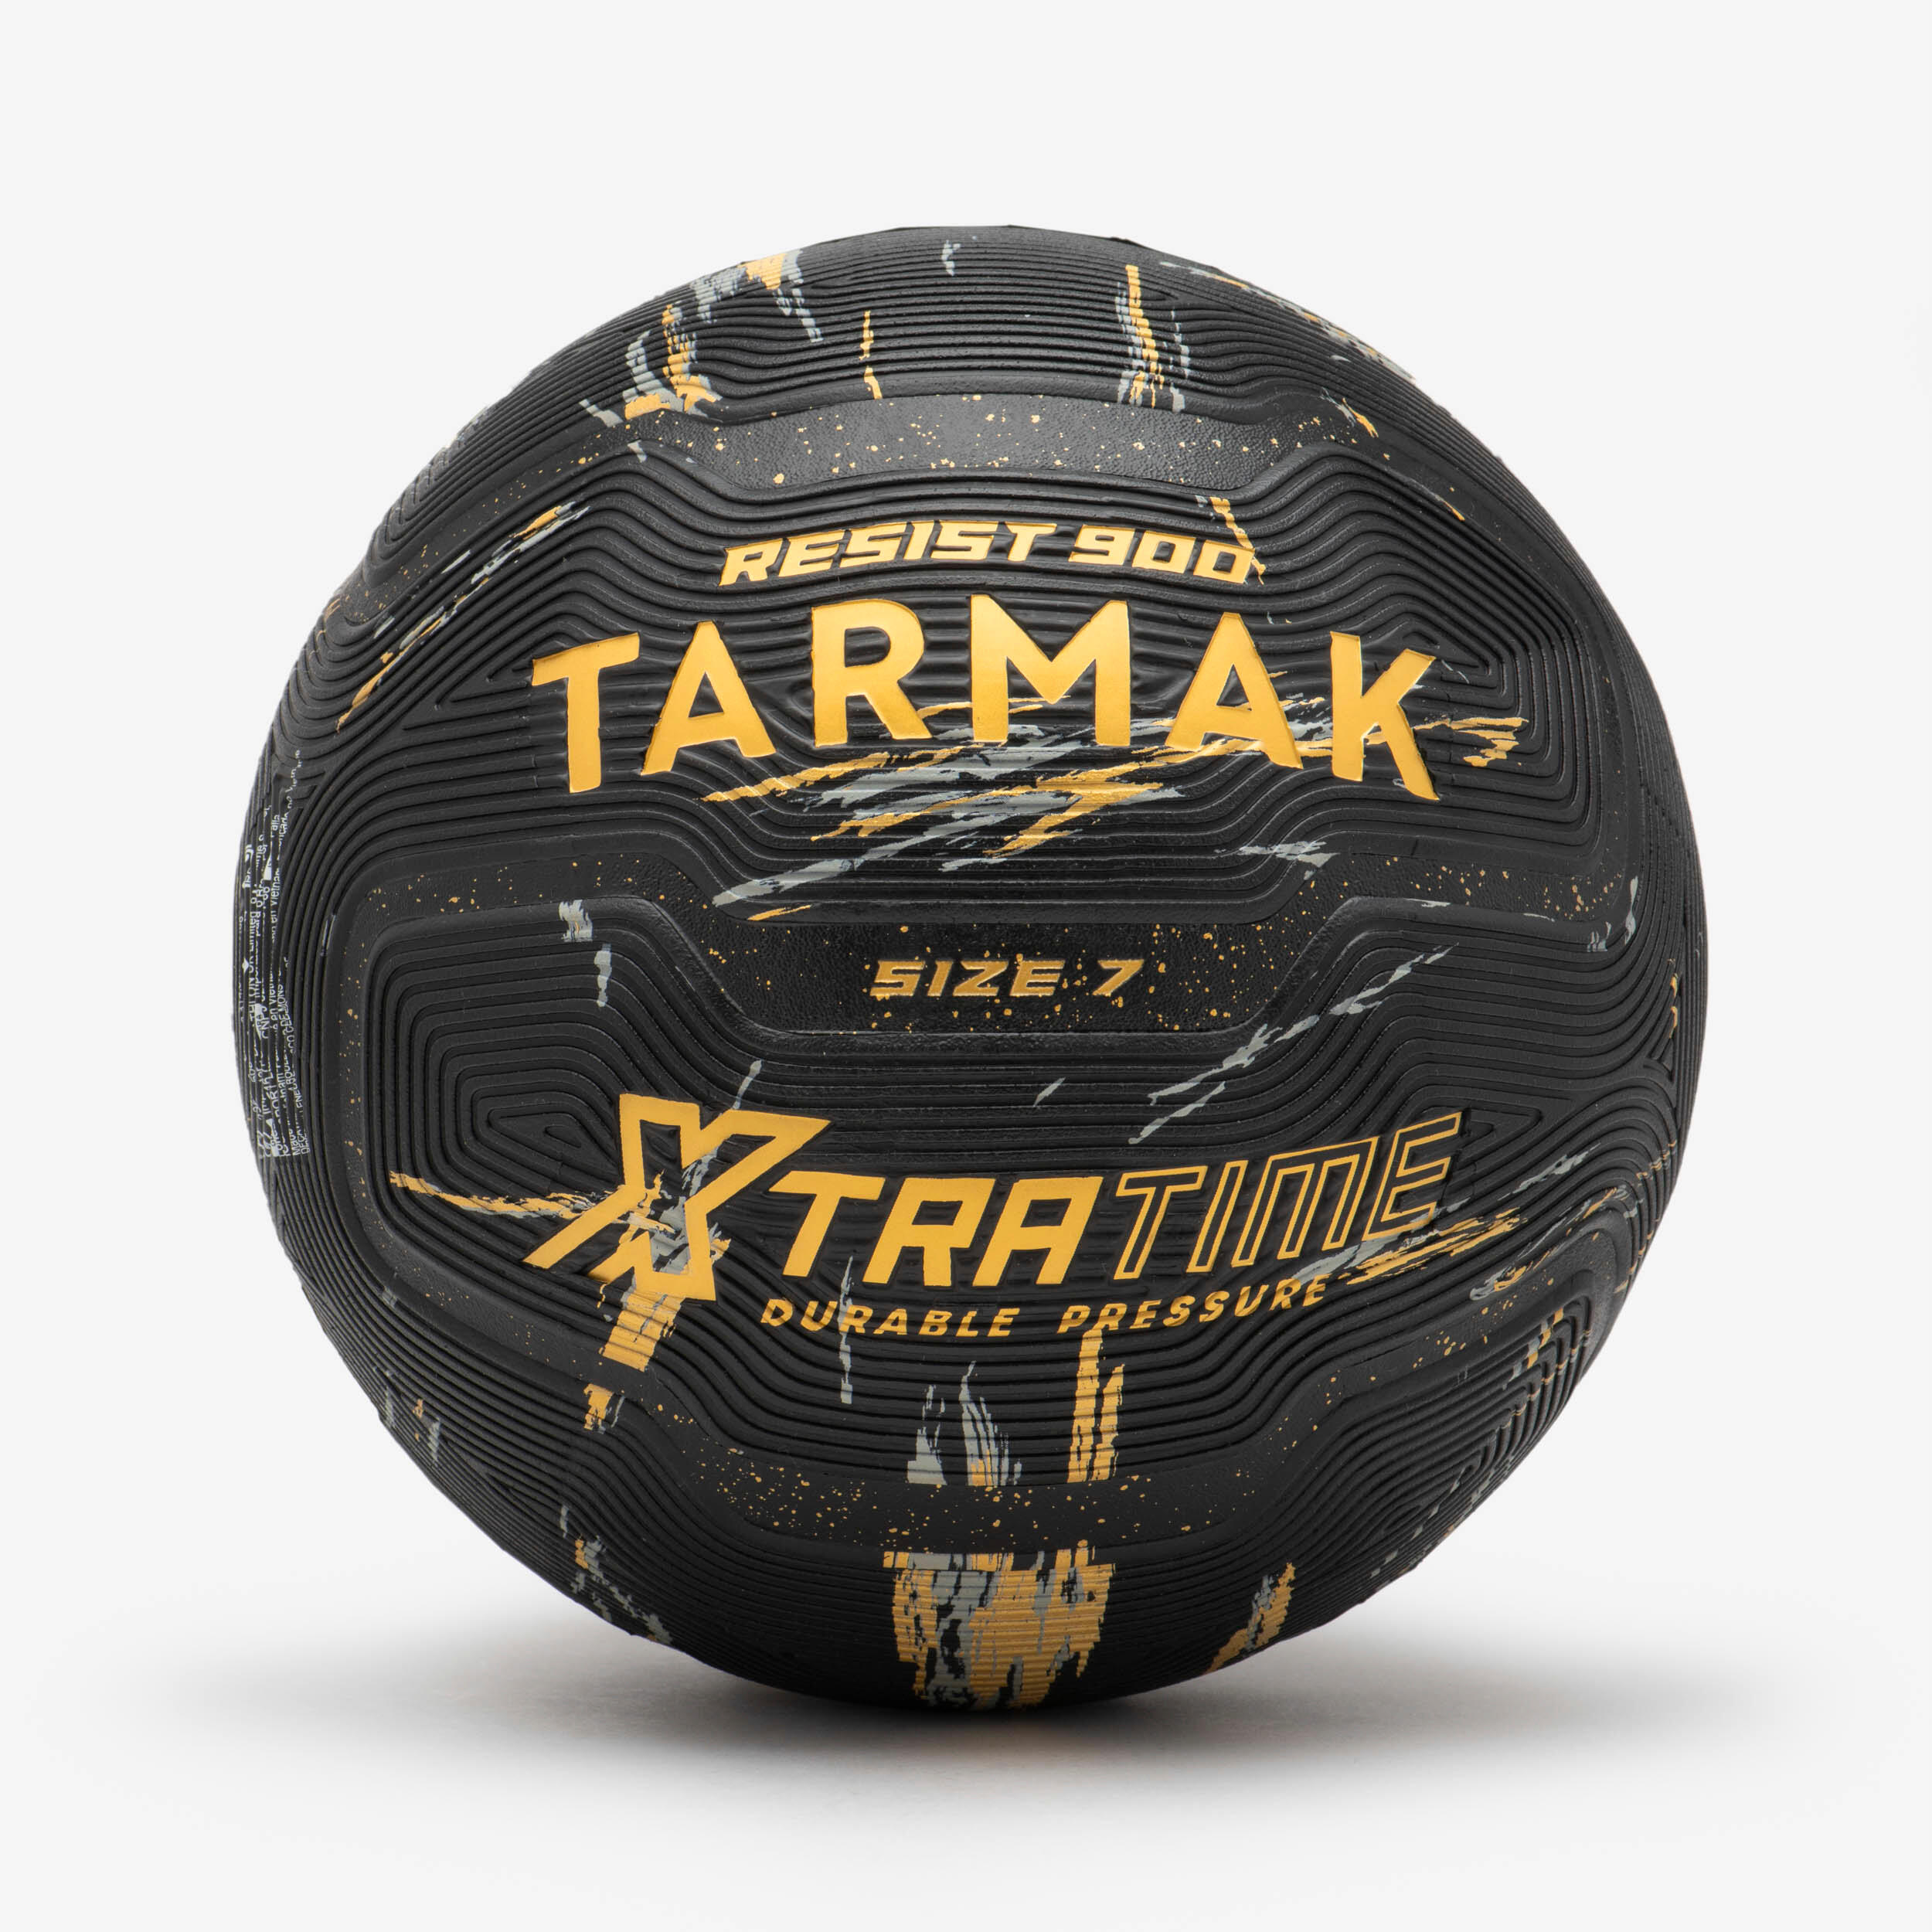 TARMAK Size 7 Basketball Resist 900 - Yellow/Black